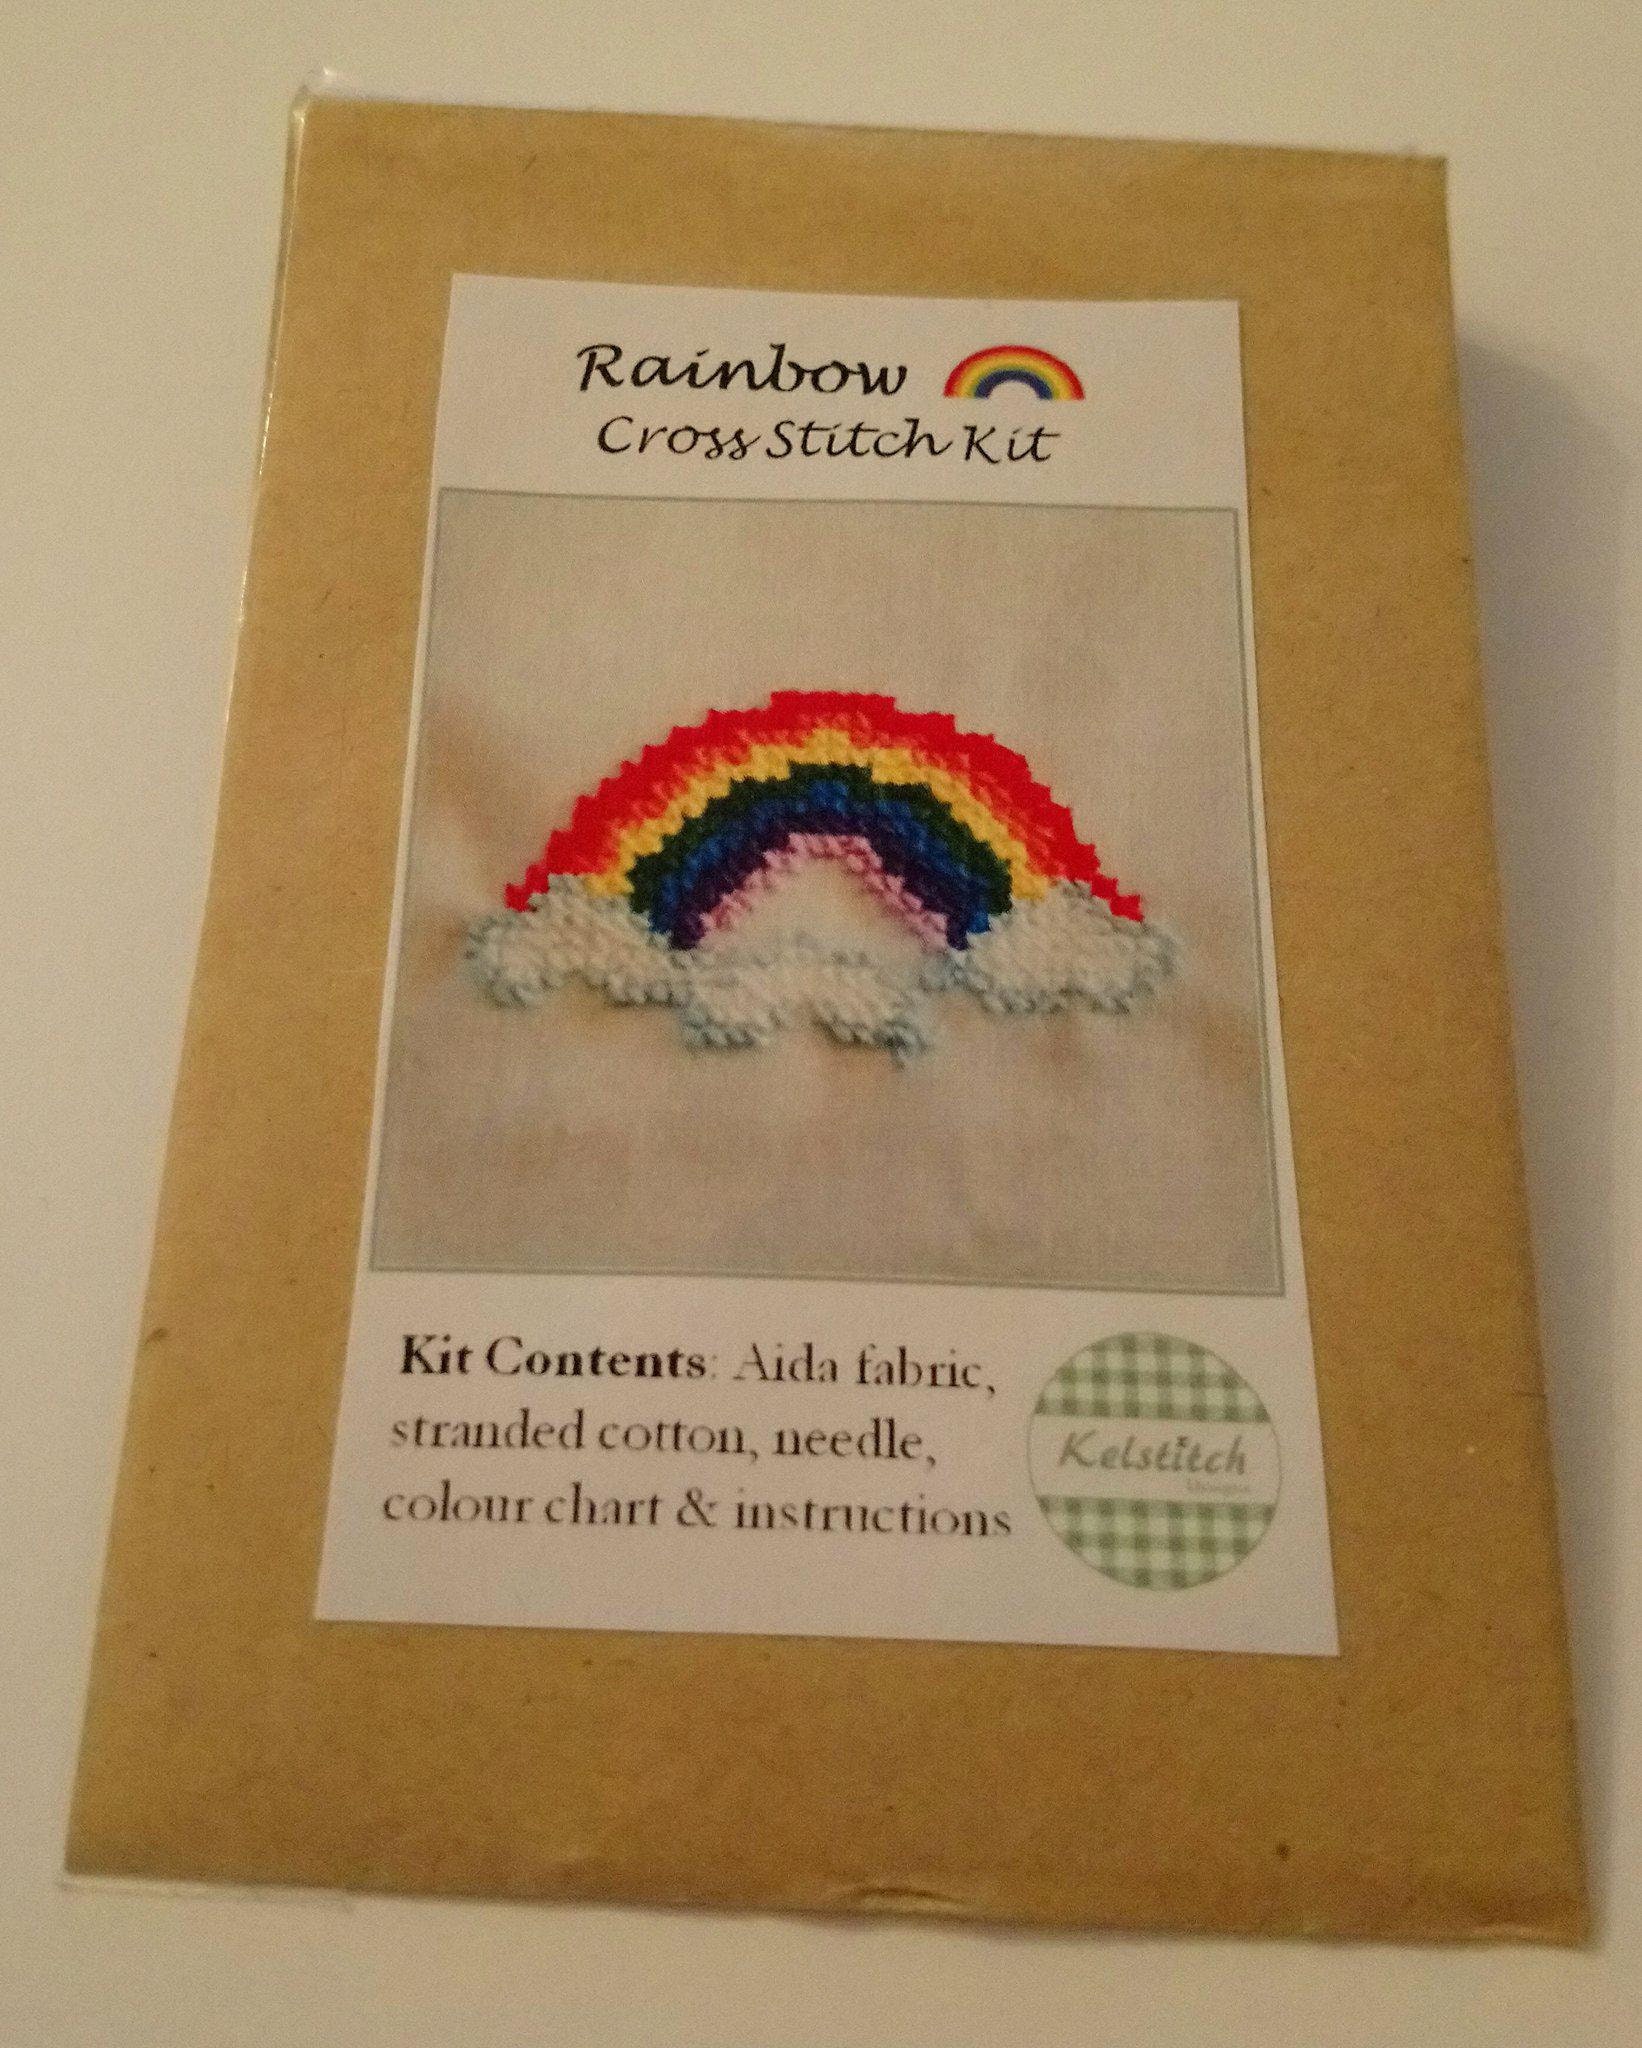 Cross stitch kit - Rainbow hearts cross stitch kit - kids cross stitch kit  - DIY beginners cross stitch kit